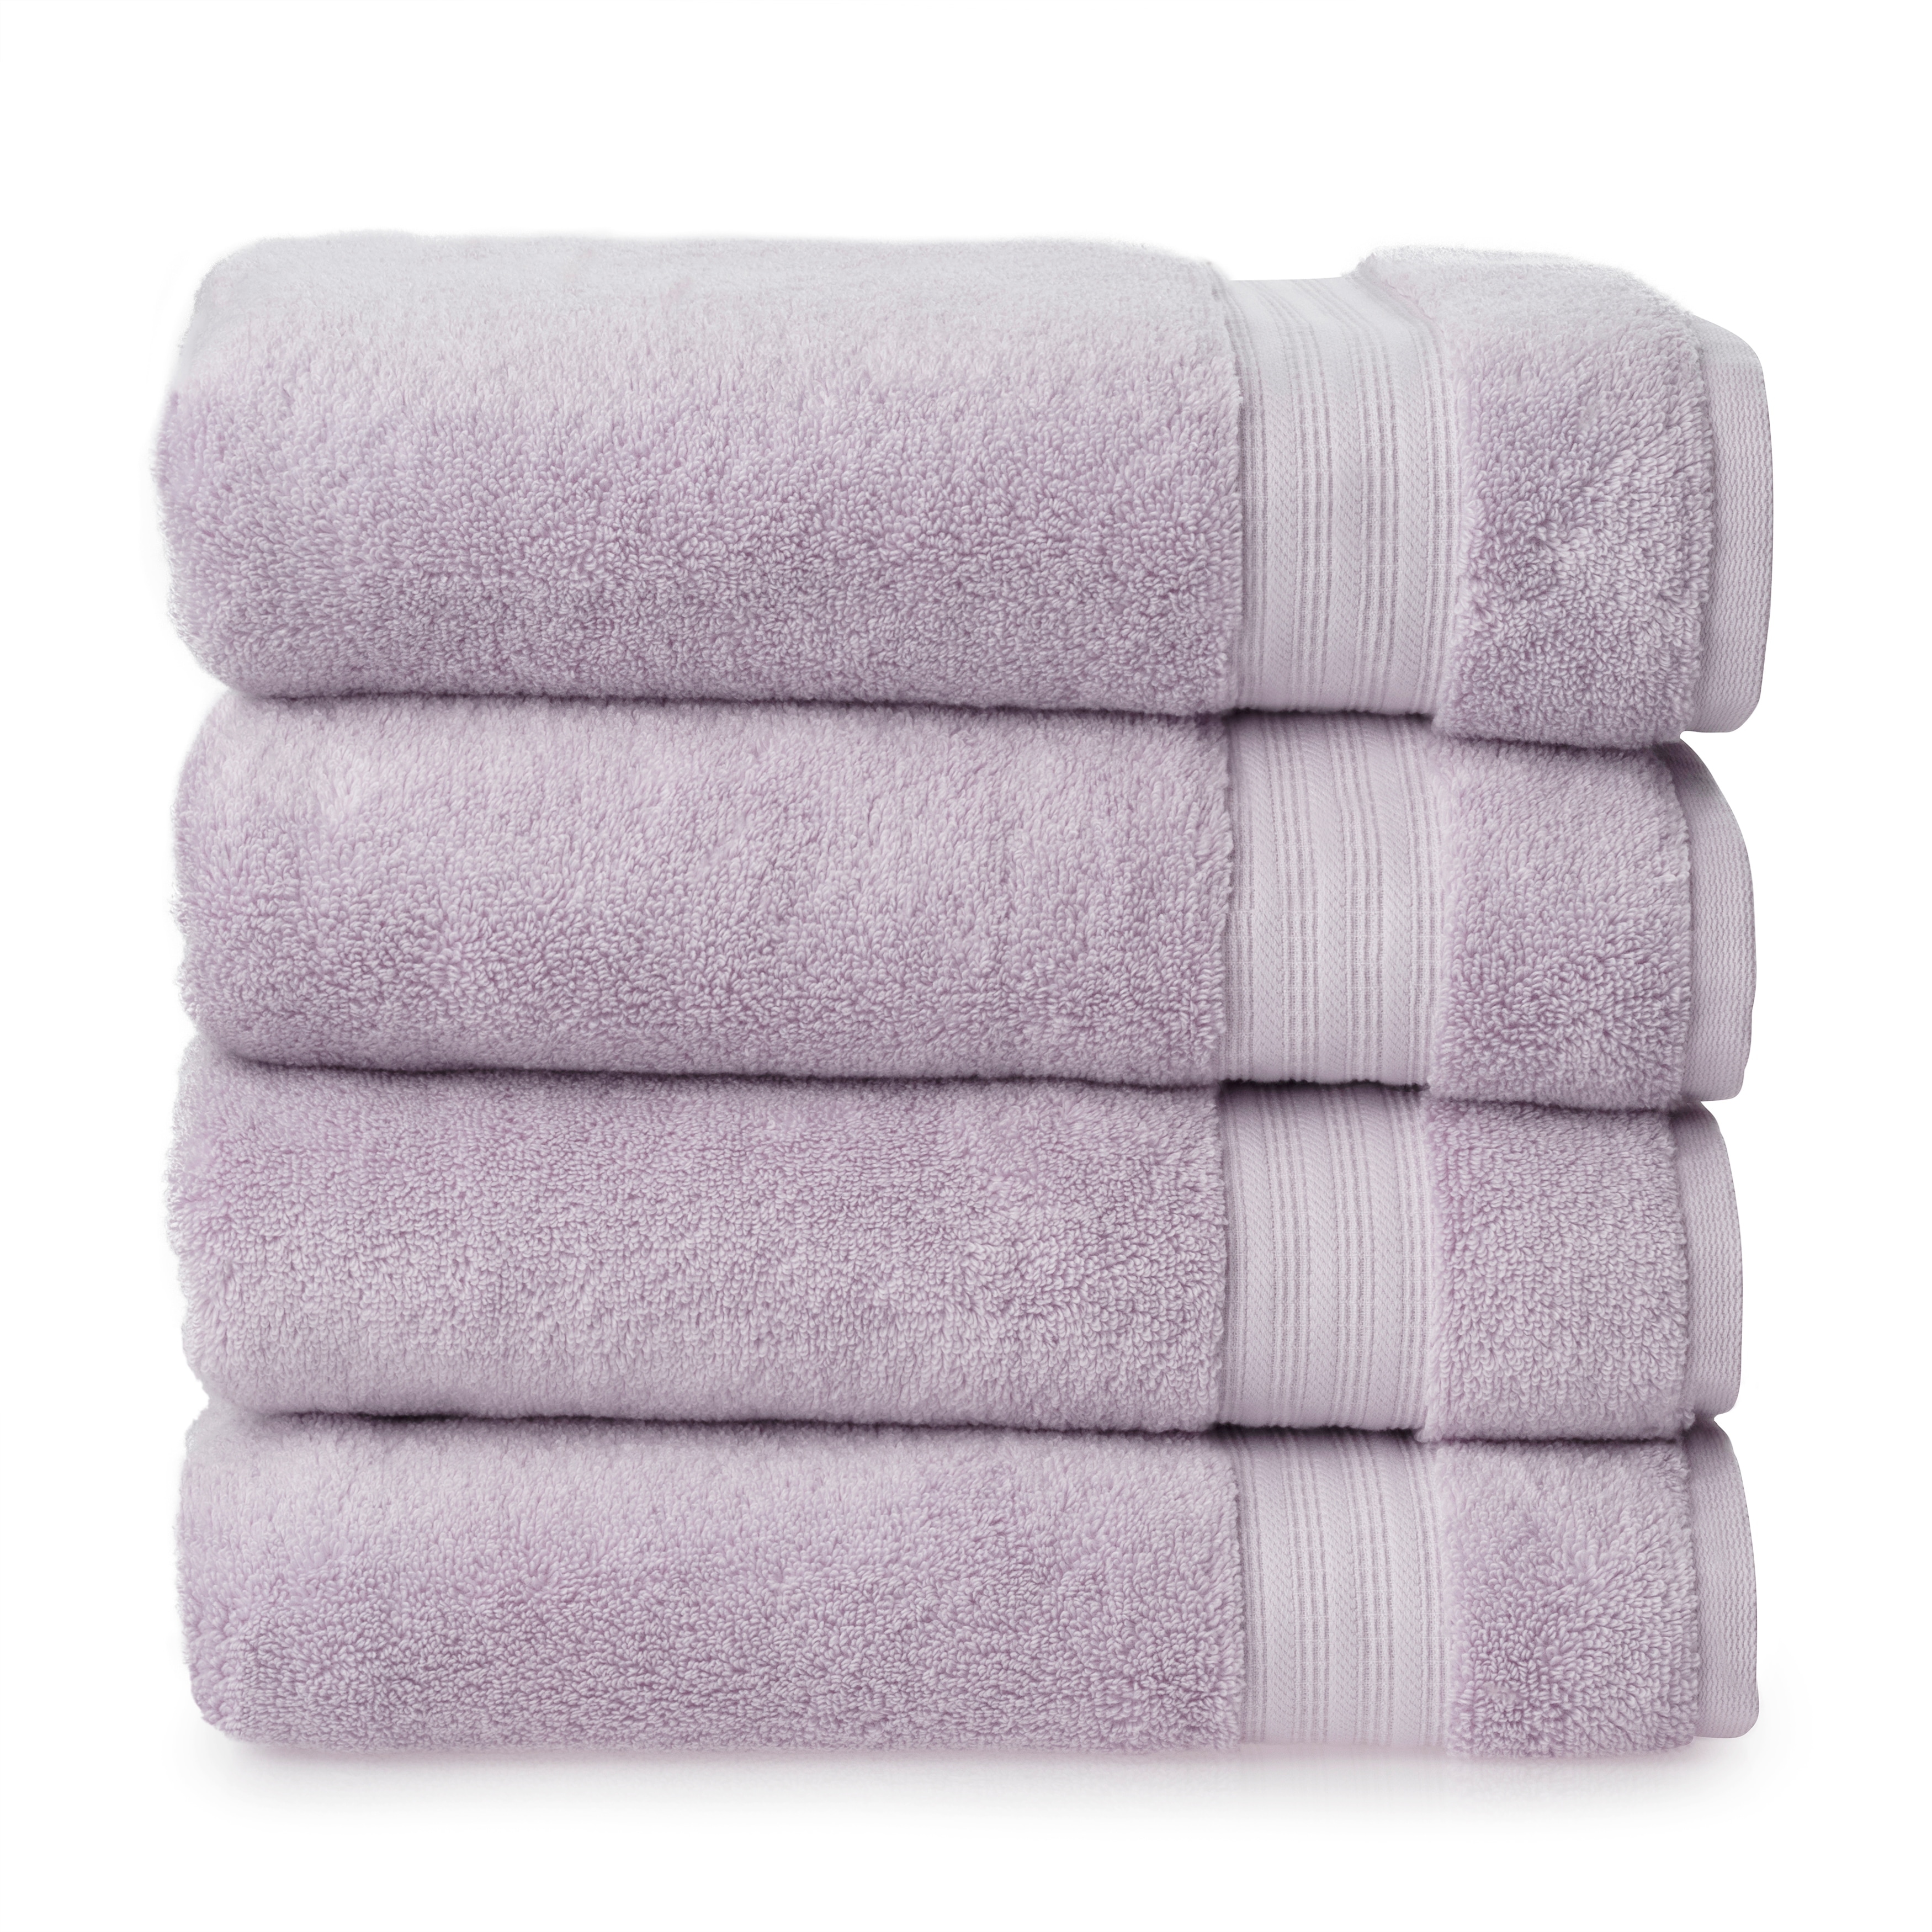 Linens Limited 100% Turkish Cotton 500gsm 6 Piece Hotel Towel Set Black